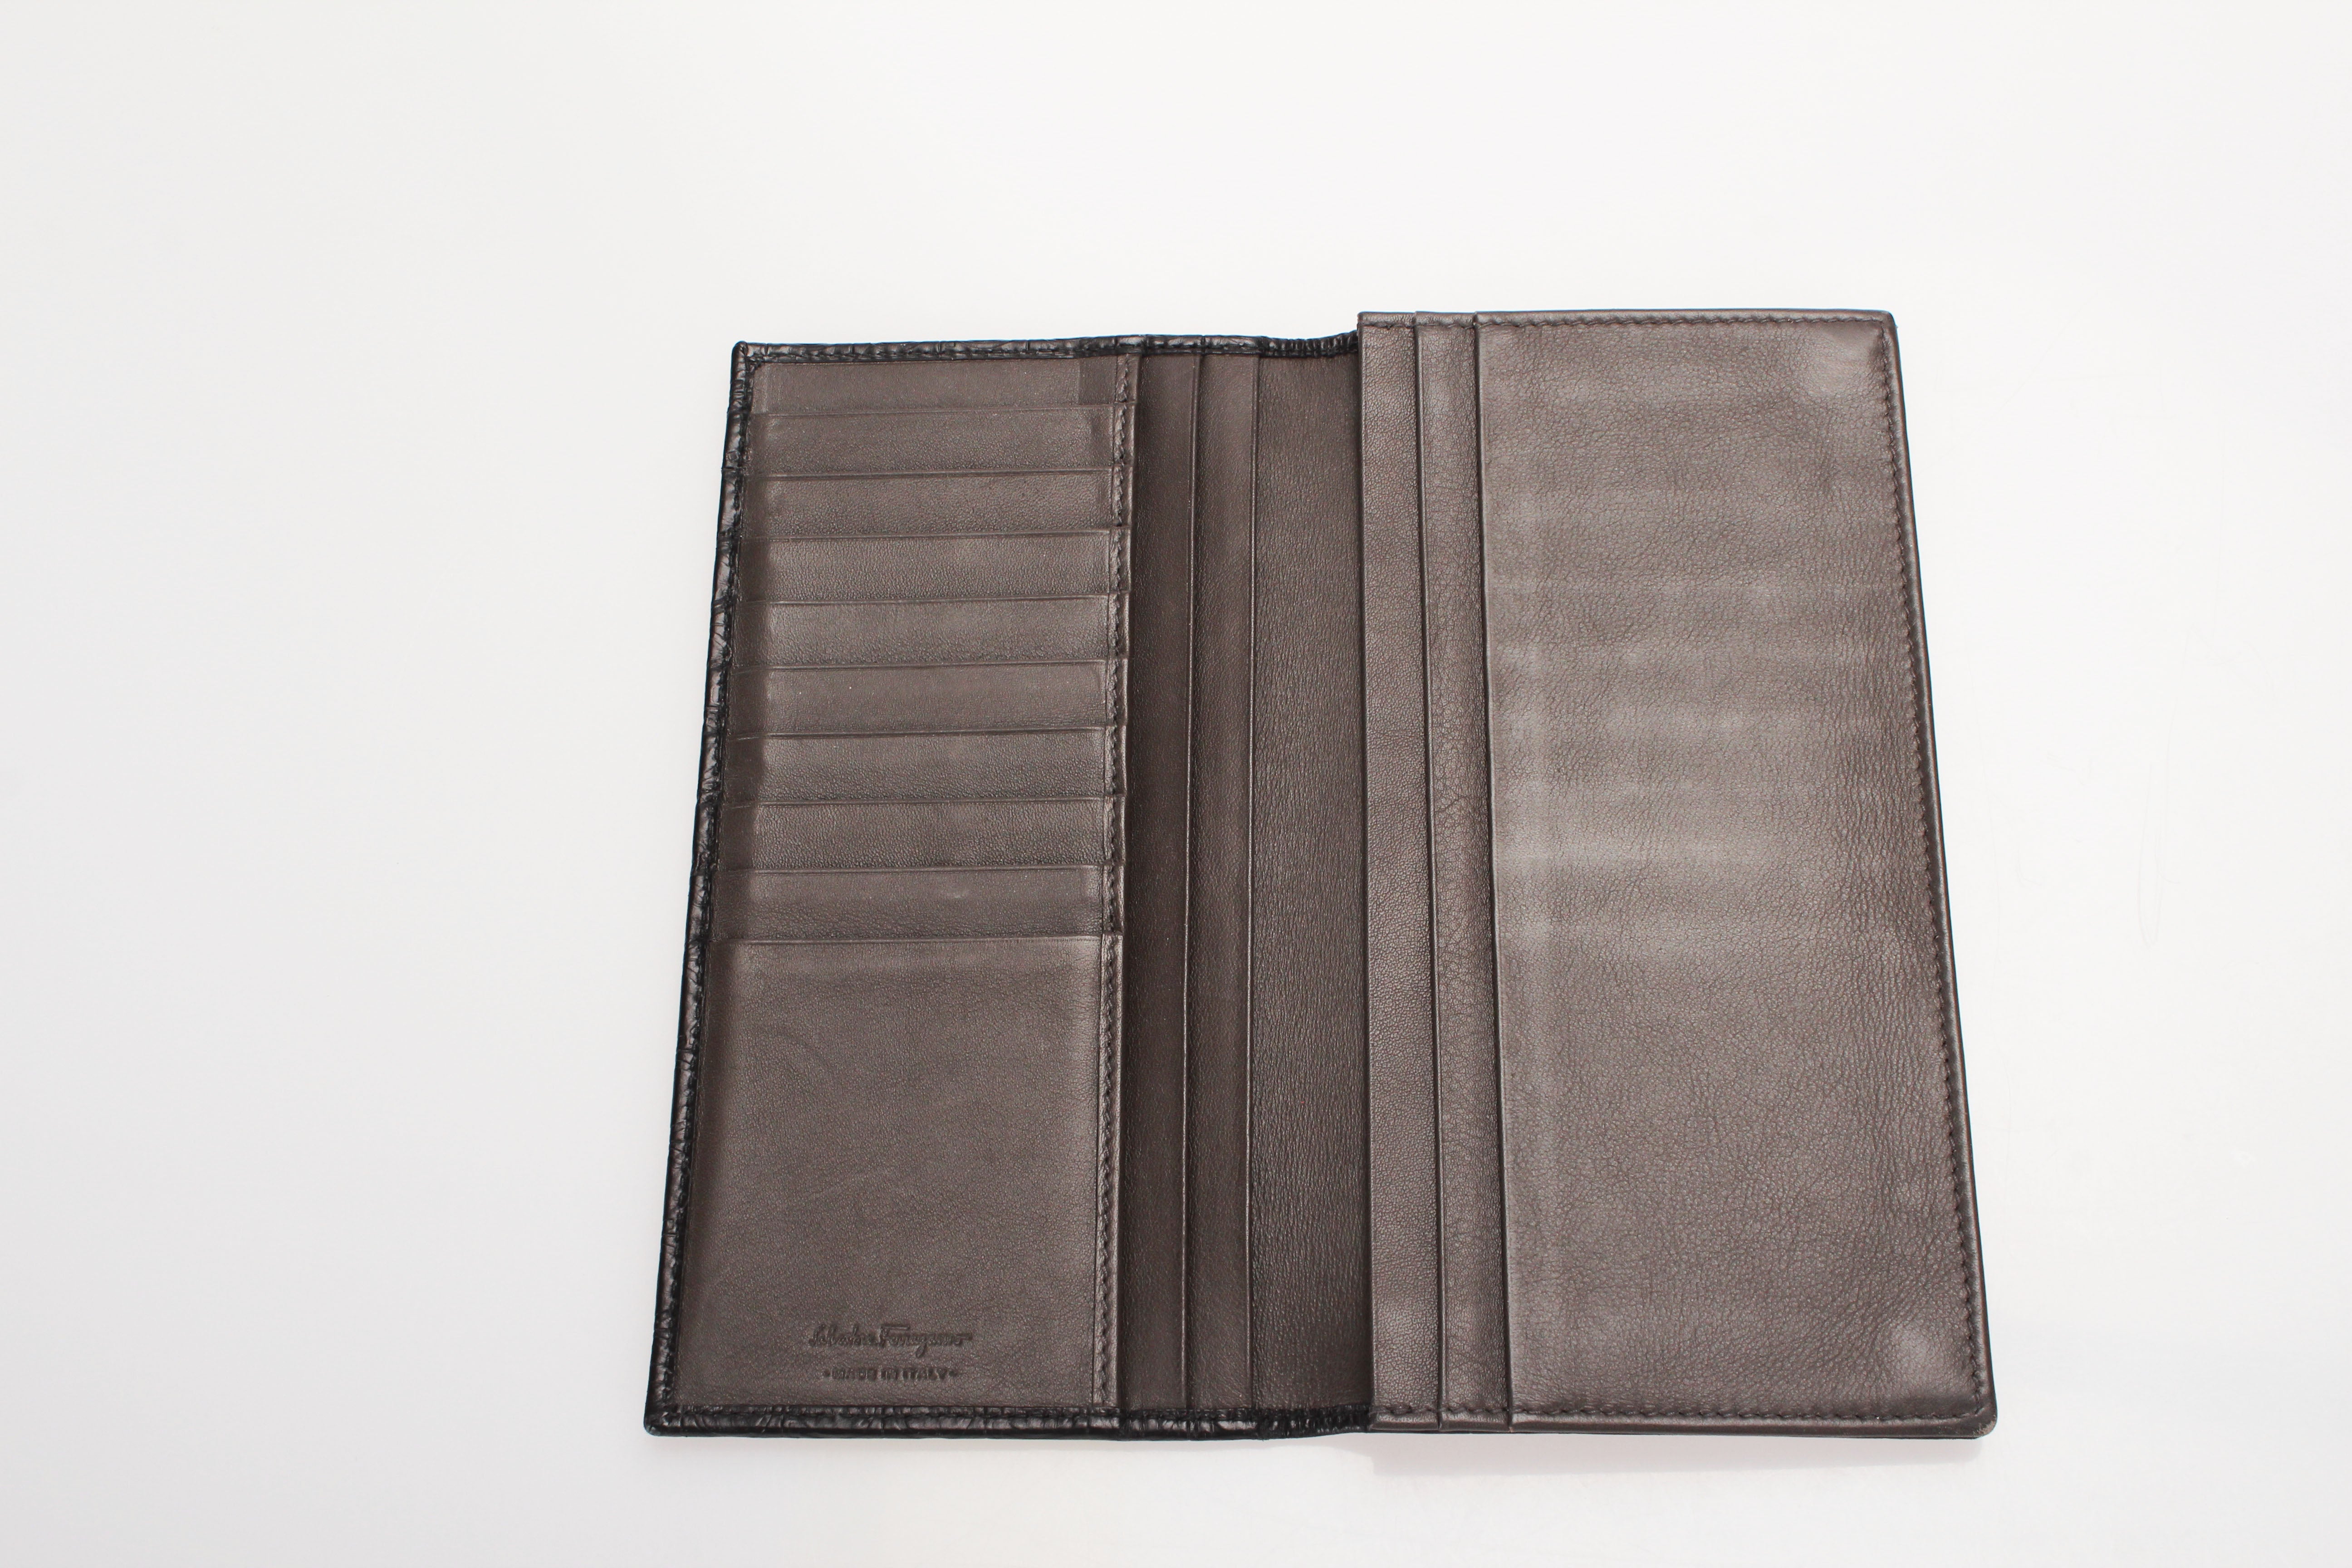 Gancini Embossed Leather Long Wallet